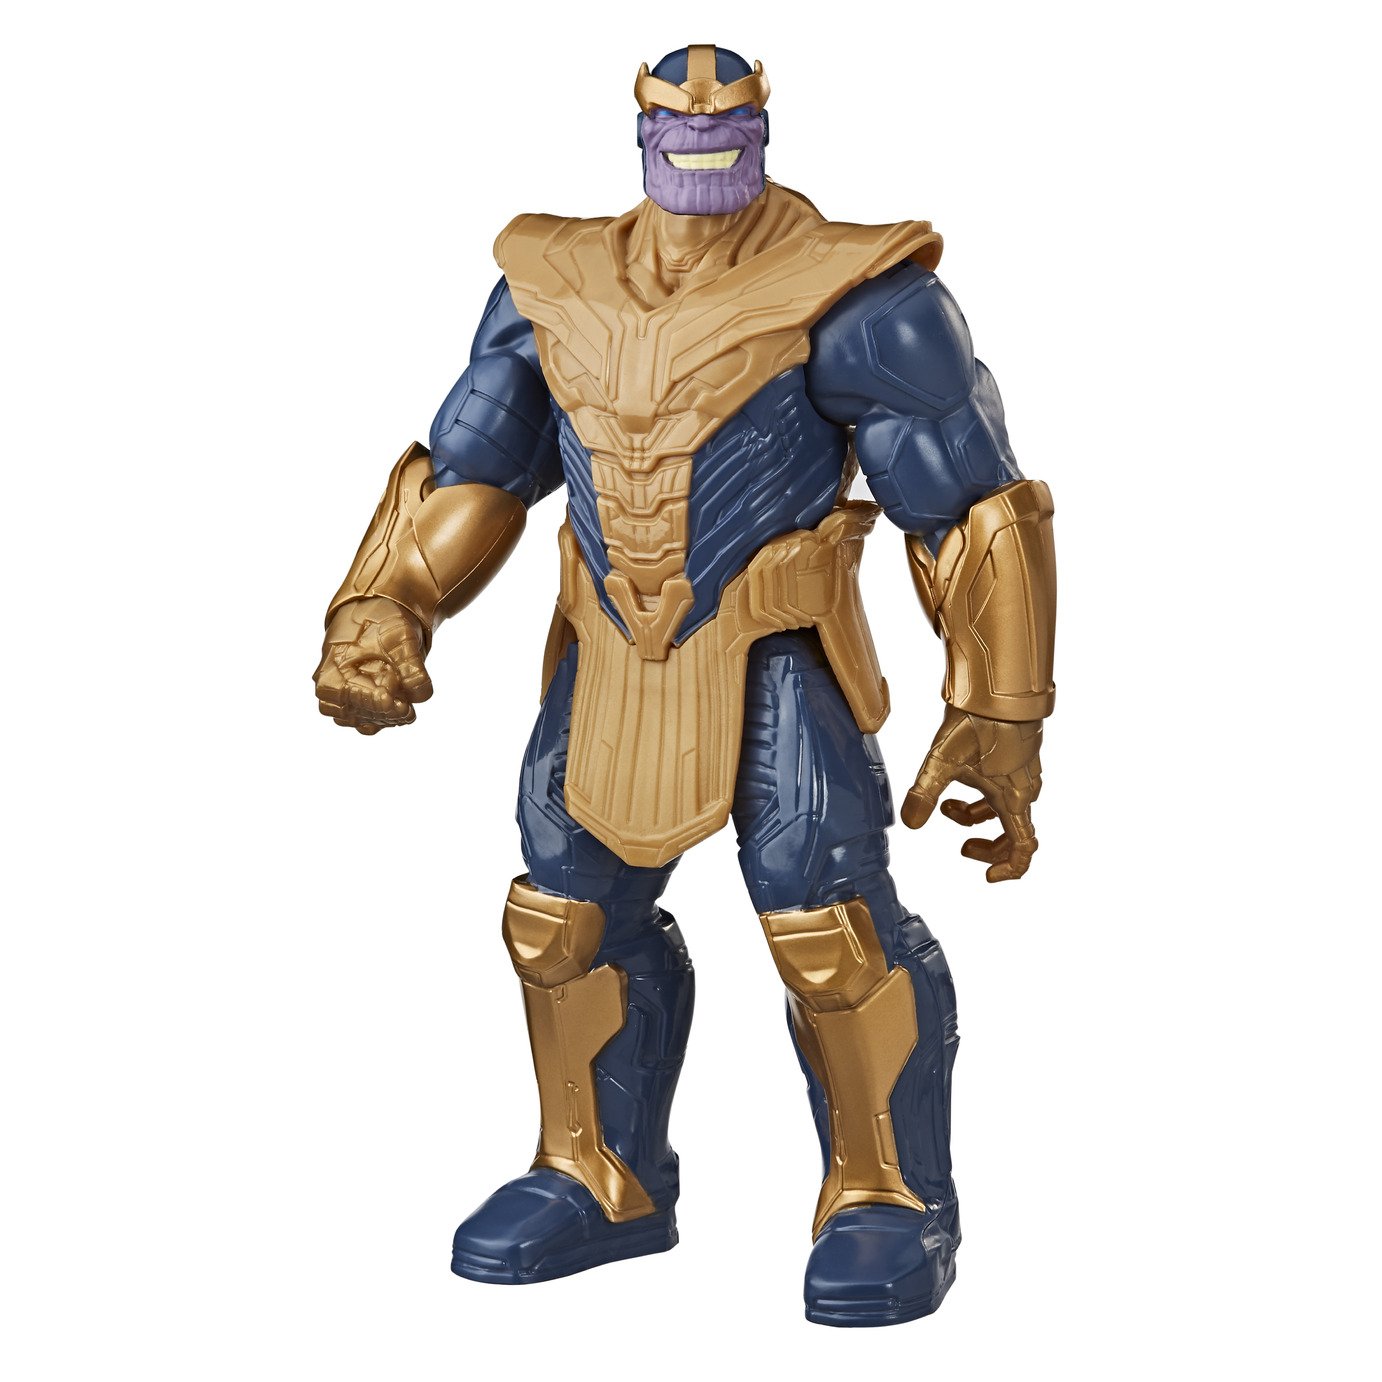 Marvel Avengers Deluxe Thanos Figure review